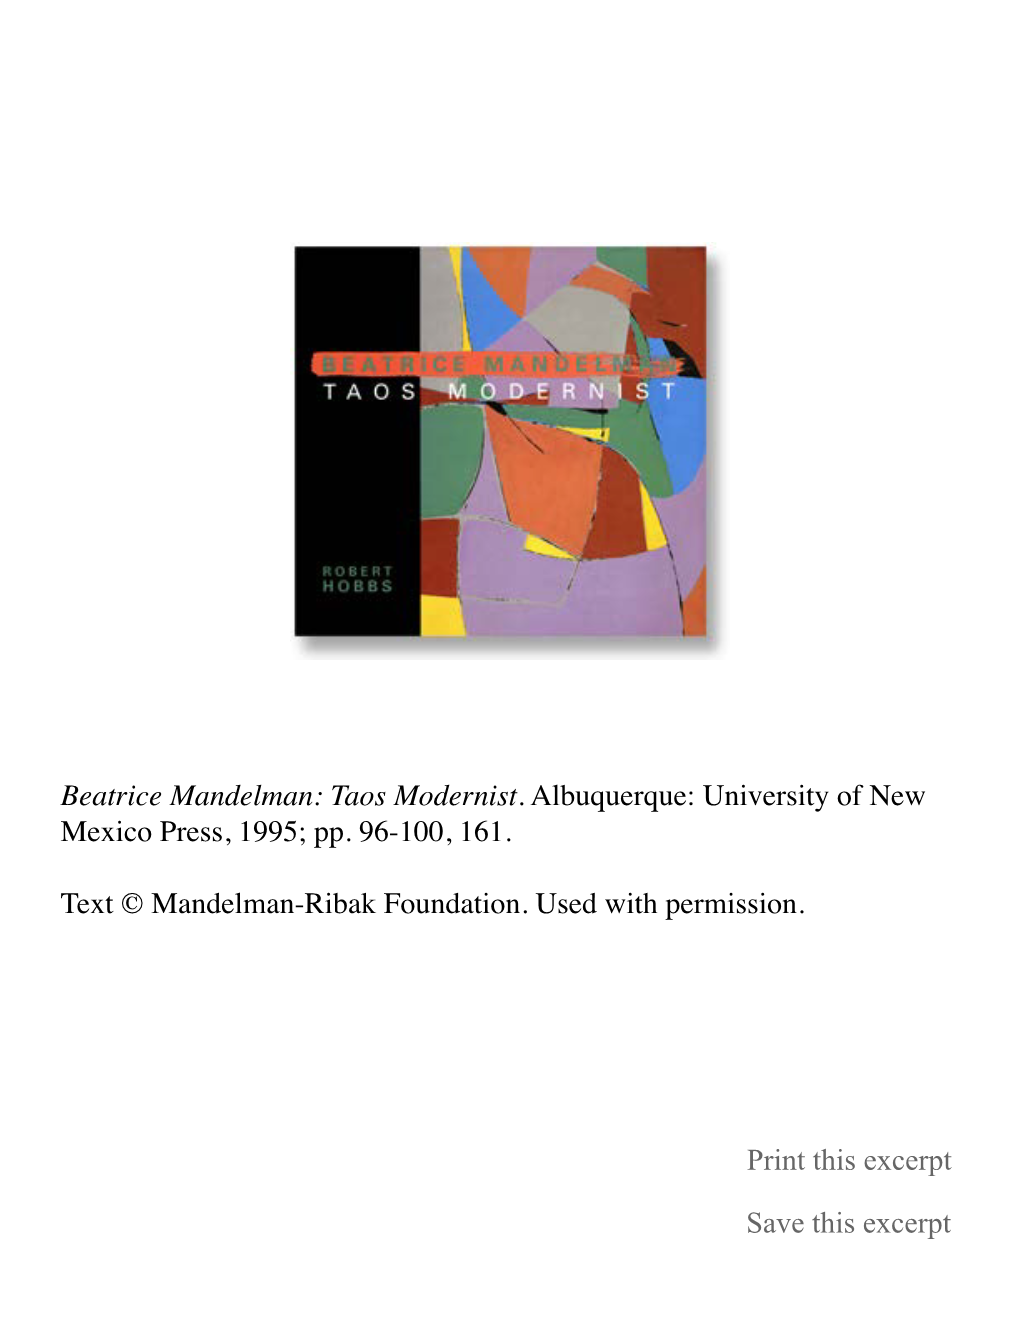 Beatrice Mandelman: Taos Modernist. Albuquerque: University of New Mexico Press, 1995; Pp